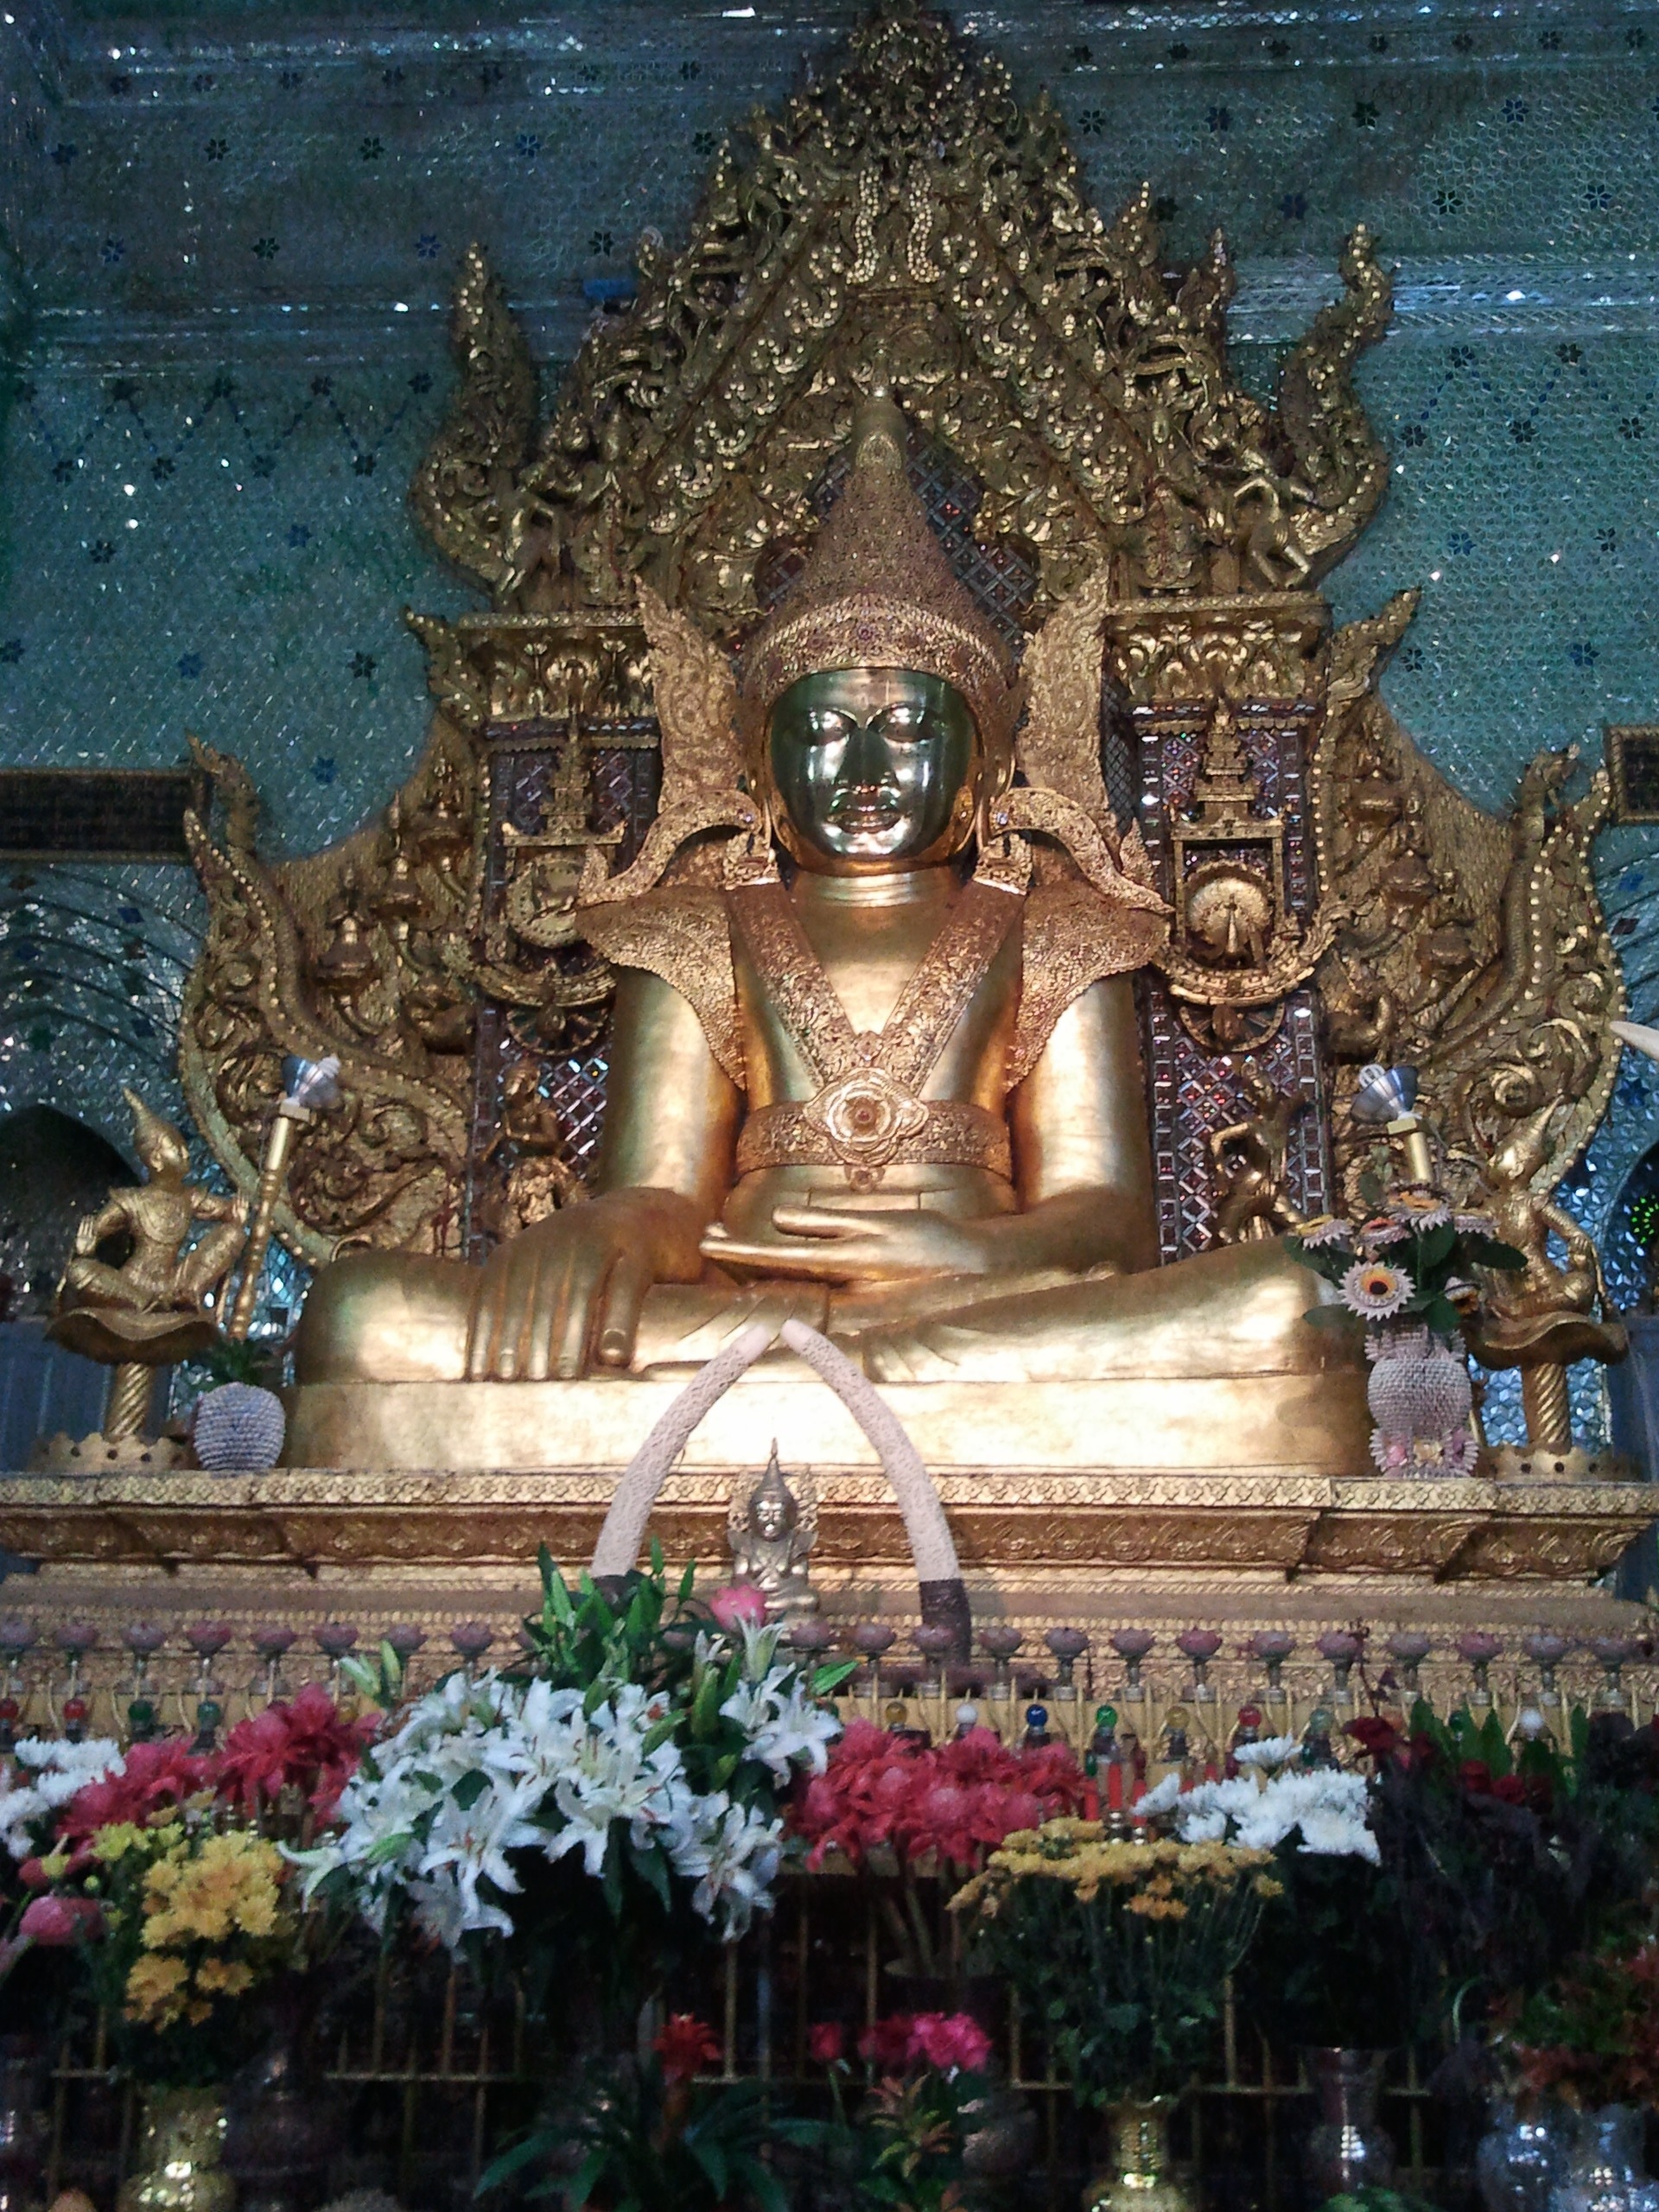 deity altar with large flower arrangement